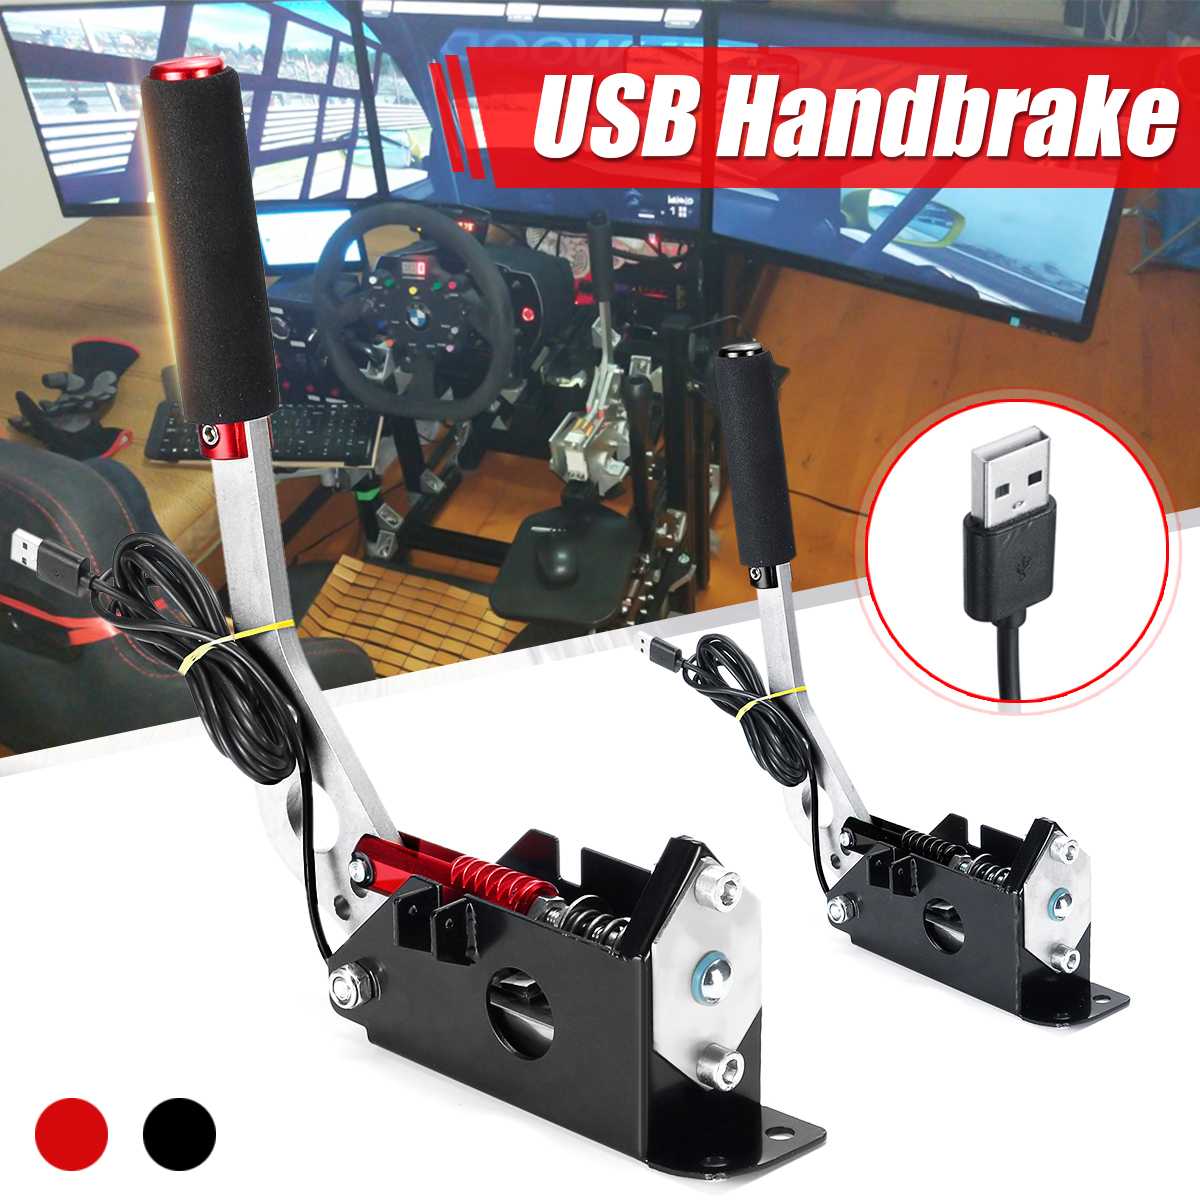 PS4/Xbox One + PC G29/G920/T300RSG295/G27 USB Hand Brake+Clamp for Racing  Games Logitech Brake System Handbrake Racing Game Part - AliExpress